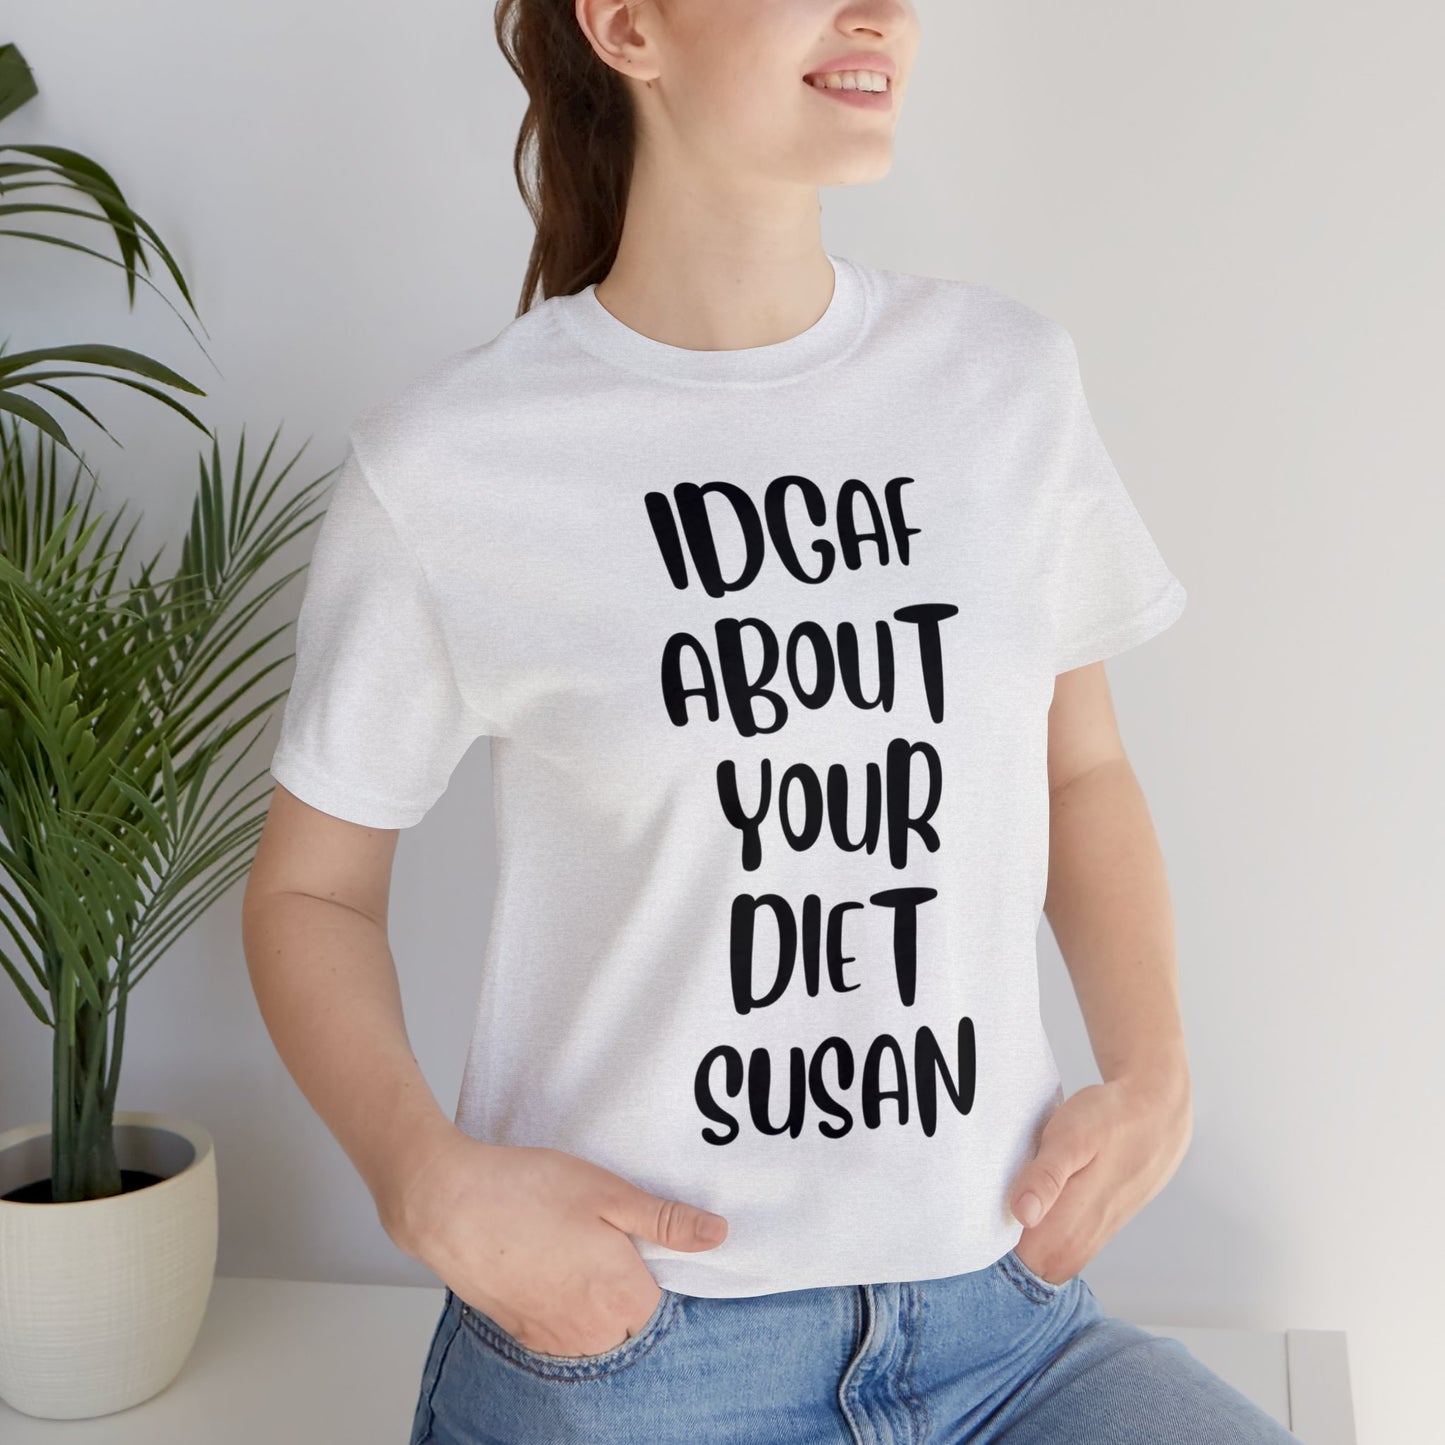 IDGAF About Your Diet Susan - Unisex Jersey Short Sleeve Tee